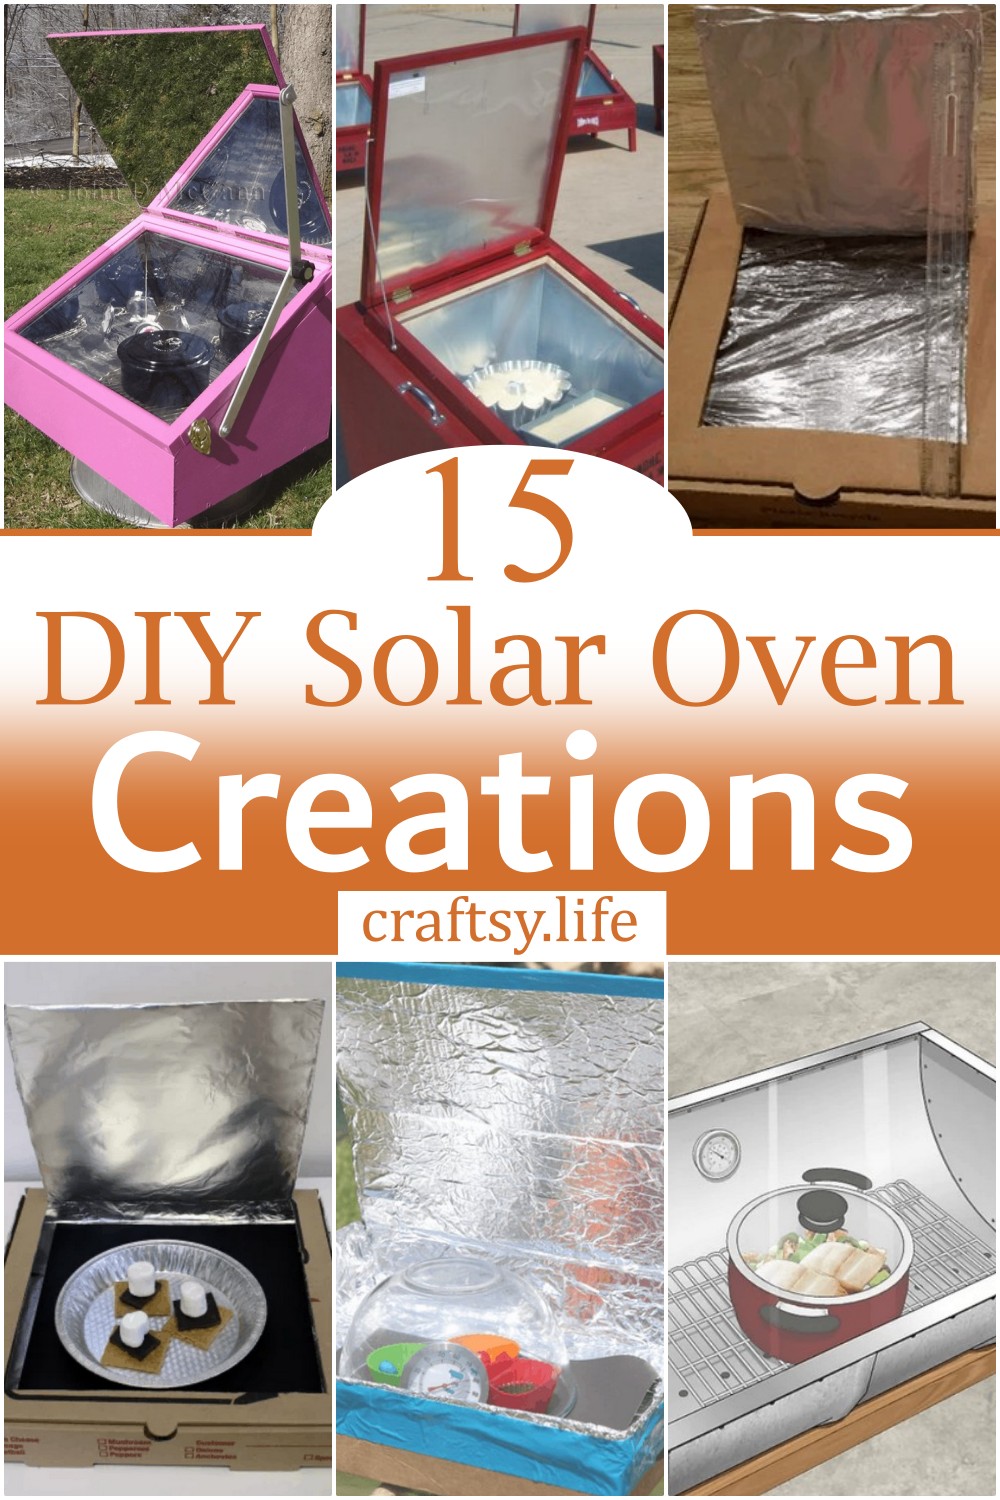 DIY Solar Oven Creations